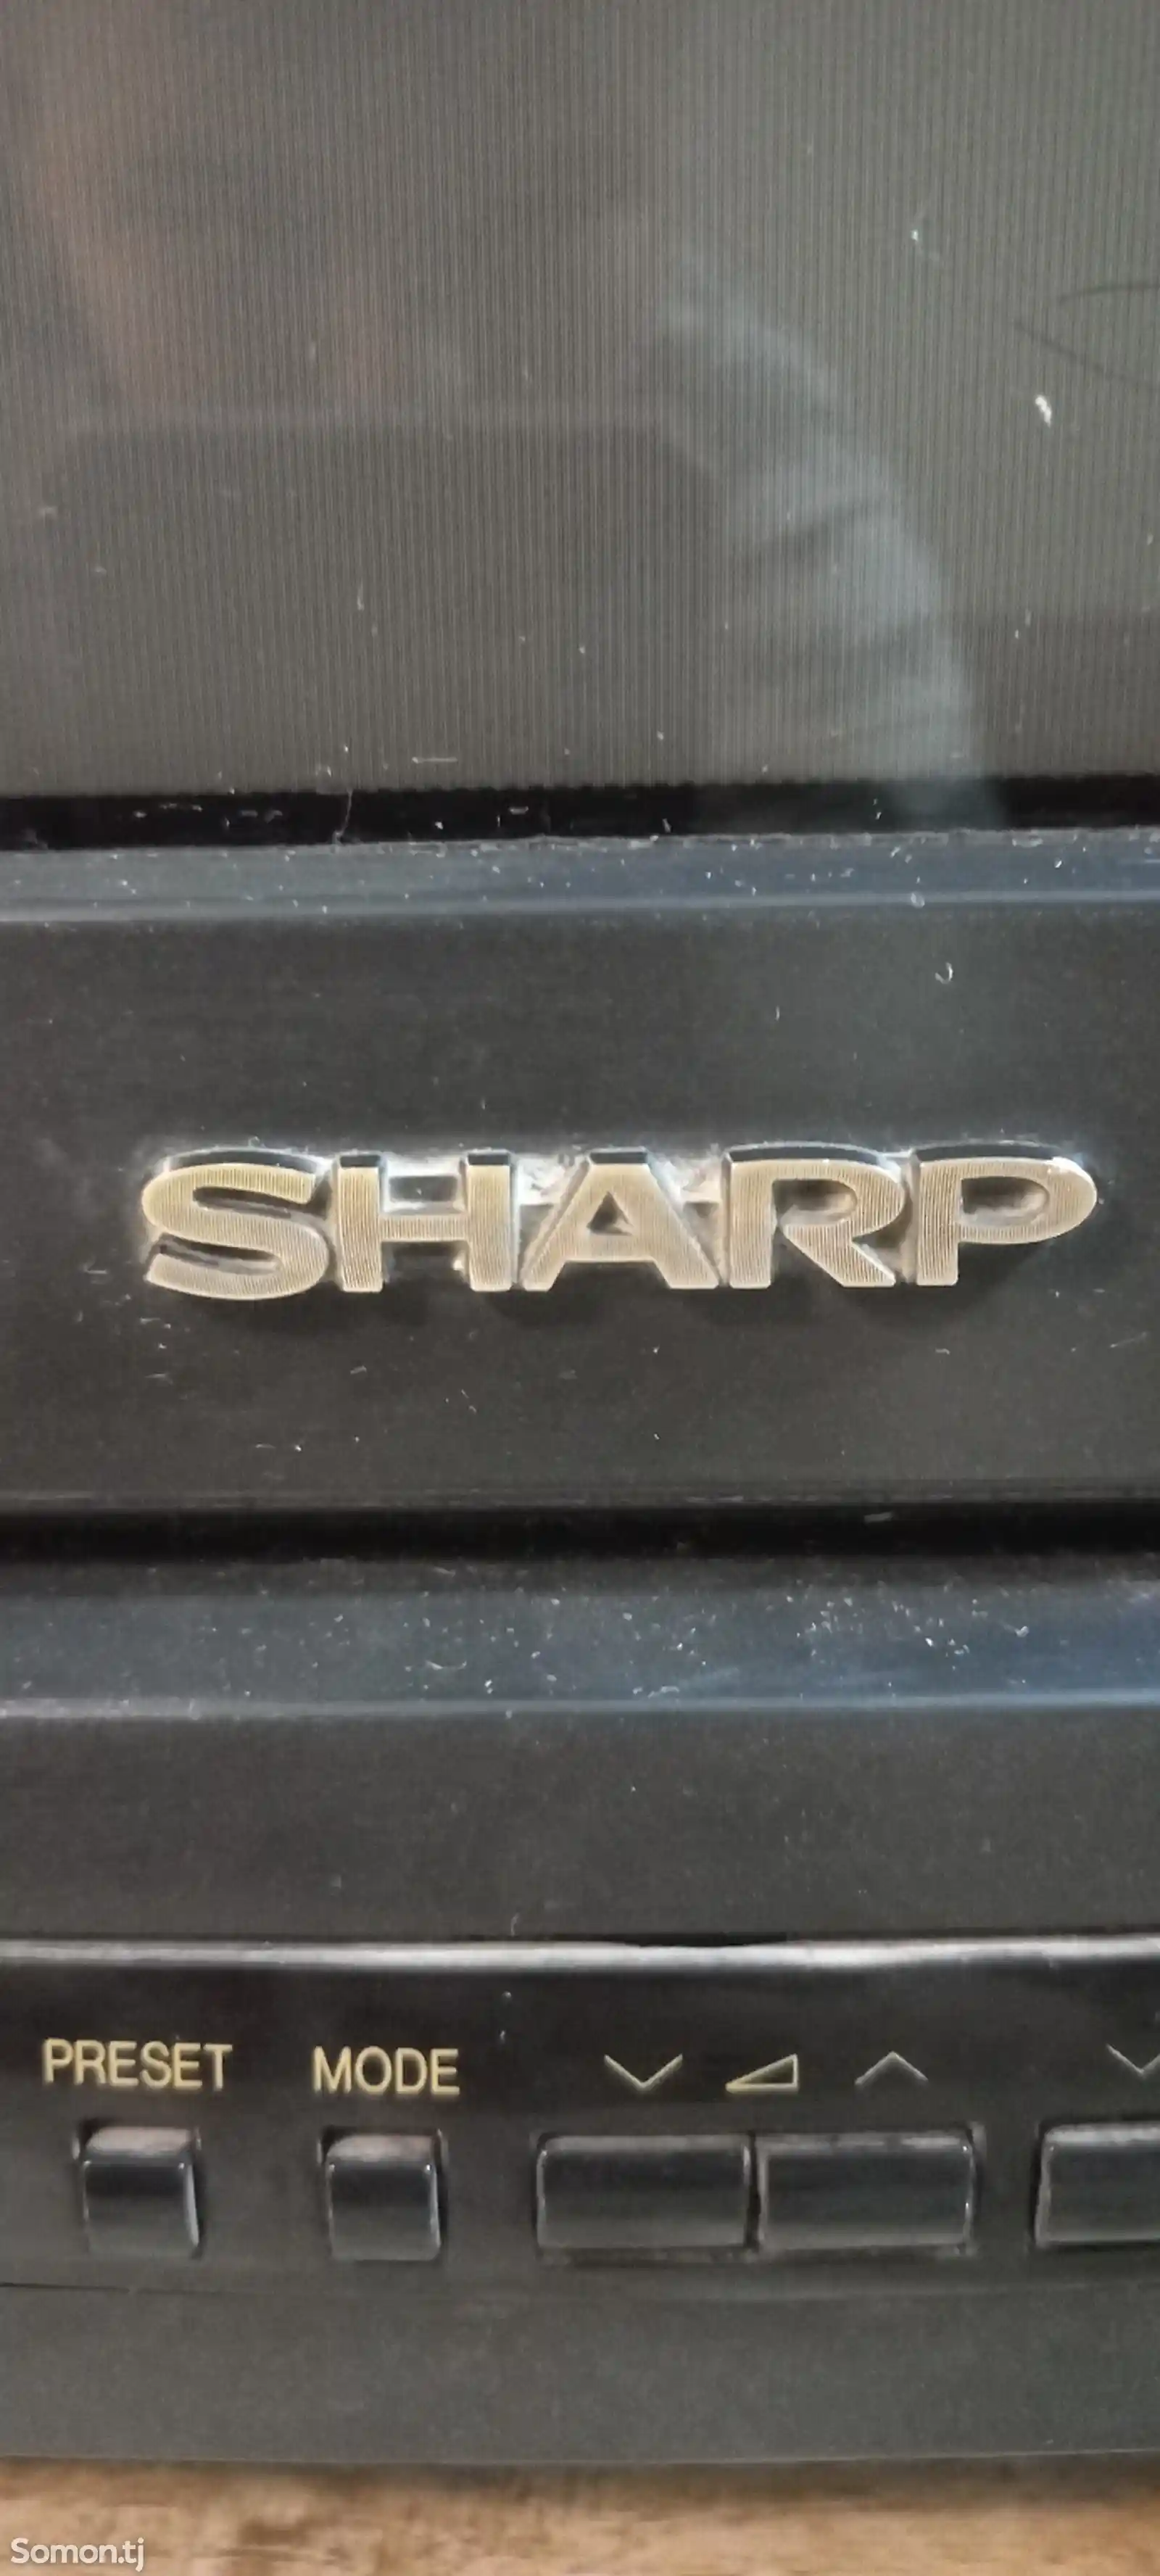 Телевизор Sharp-2